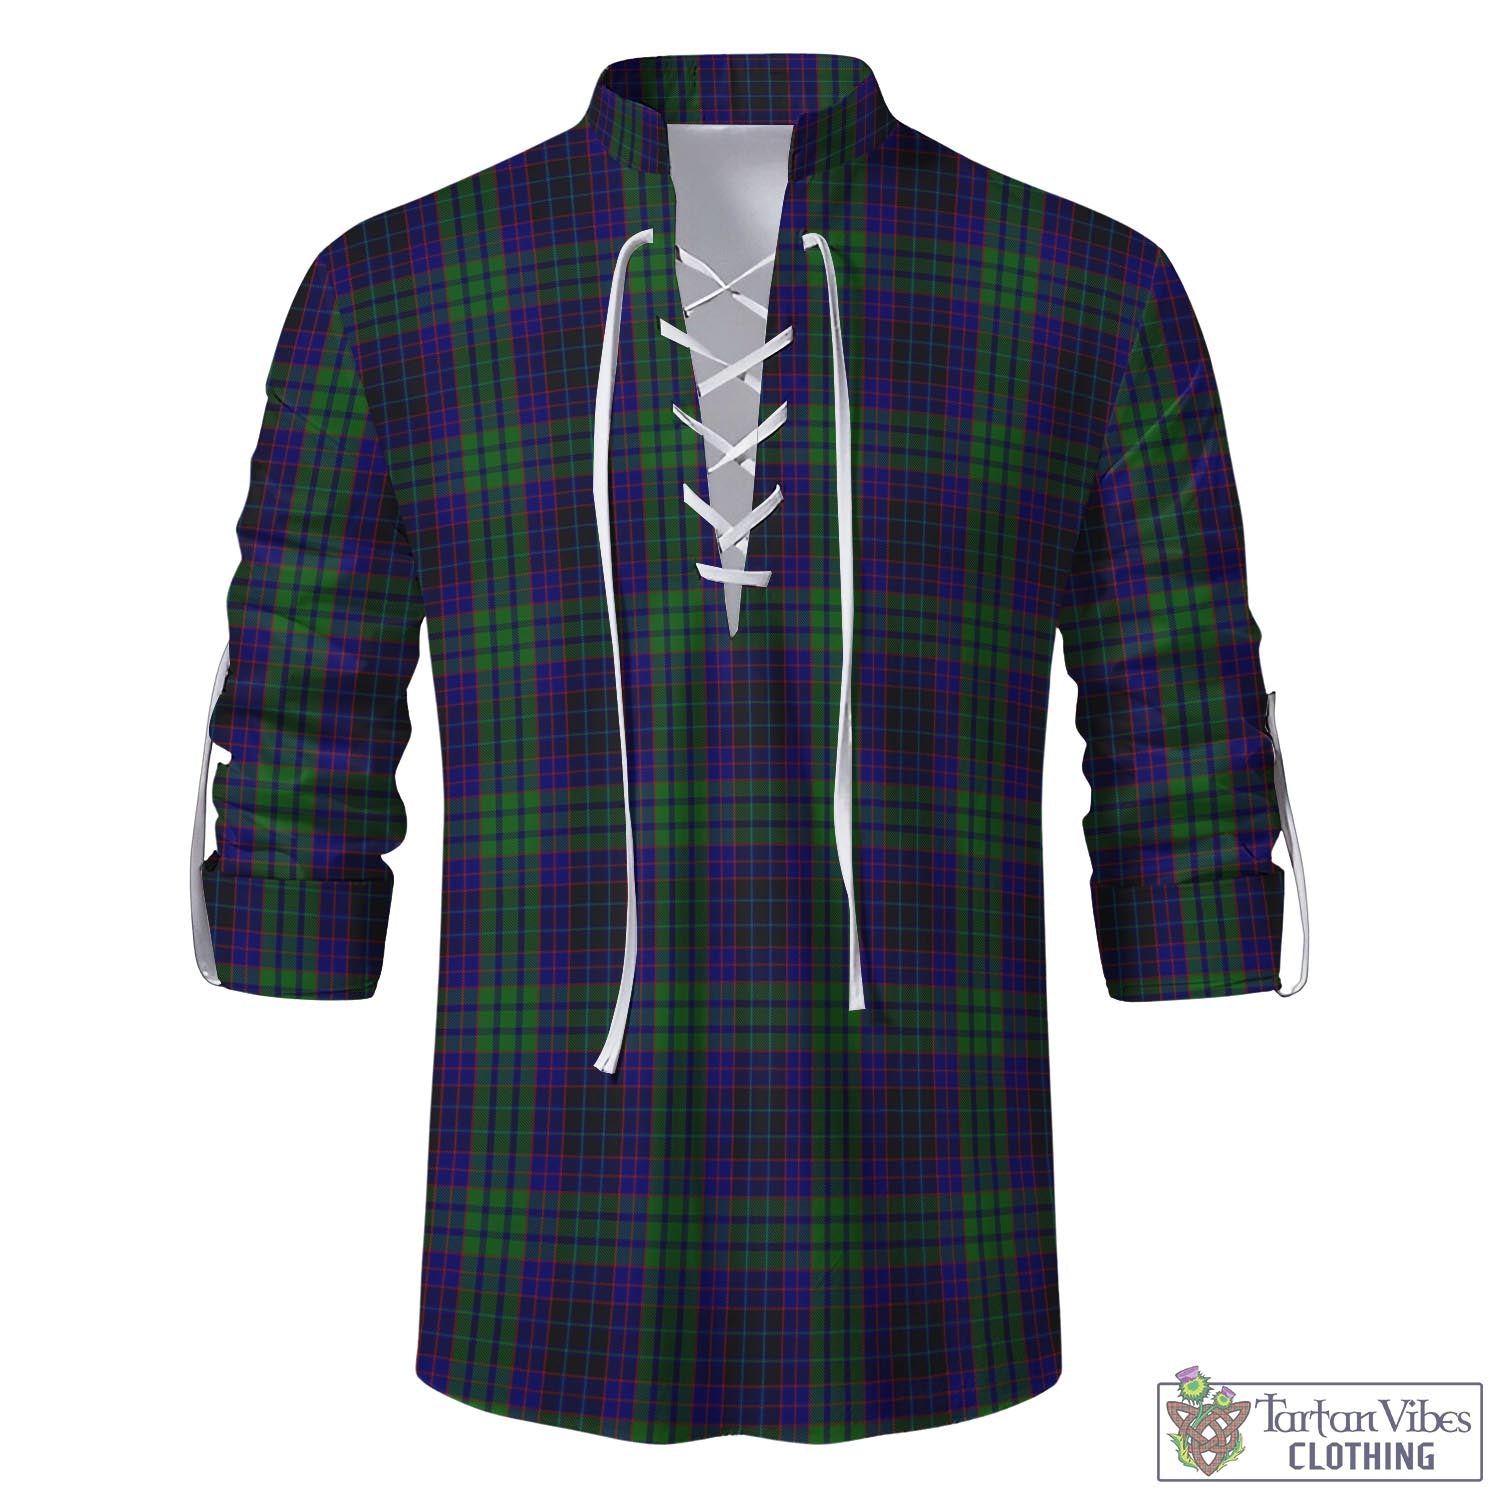 Tartan Vibes Clothing Lumsden Green Tartan Men's Scottish Traditional Jacobite Ghillie Kilt Shirt